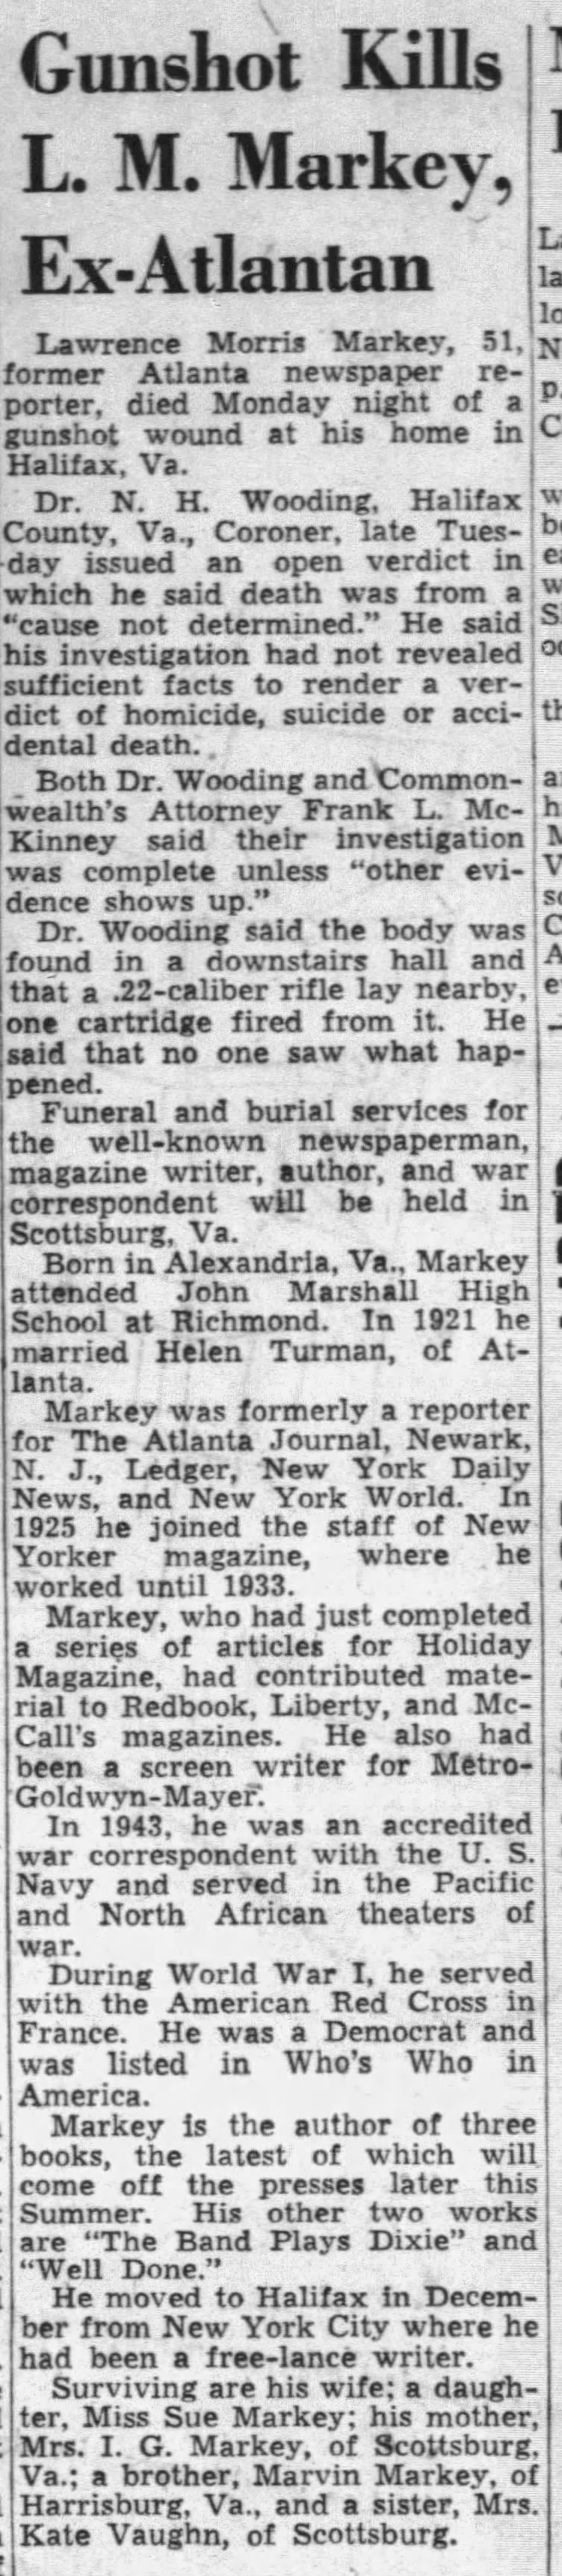 1950 Jul. Gunshot Kills Lawrence Morris Markey, 51, Ex-Atlantan.